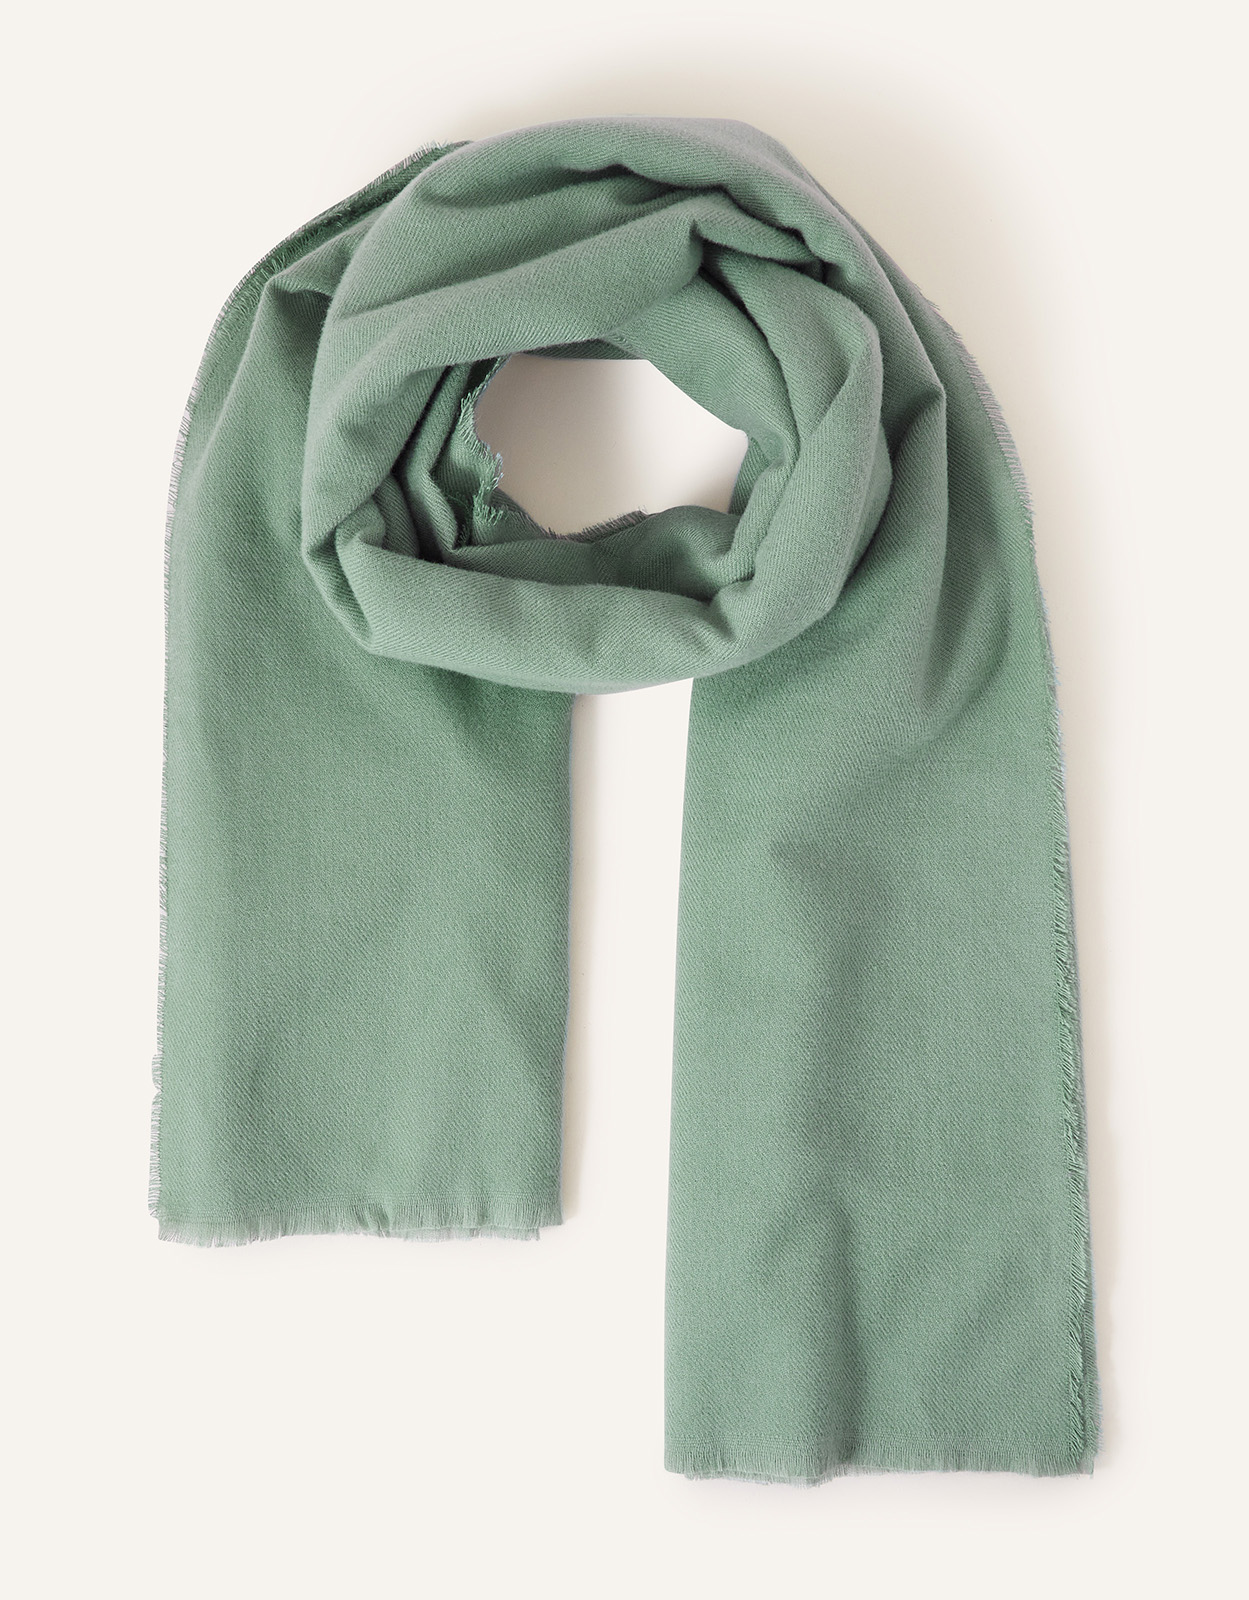 Accessorize Women's Light Green Grace Super-Soft Blanket Scarf, Size: 100x180cm